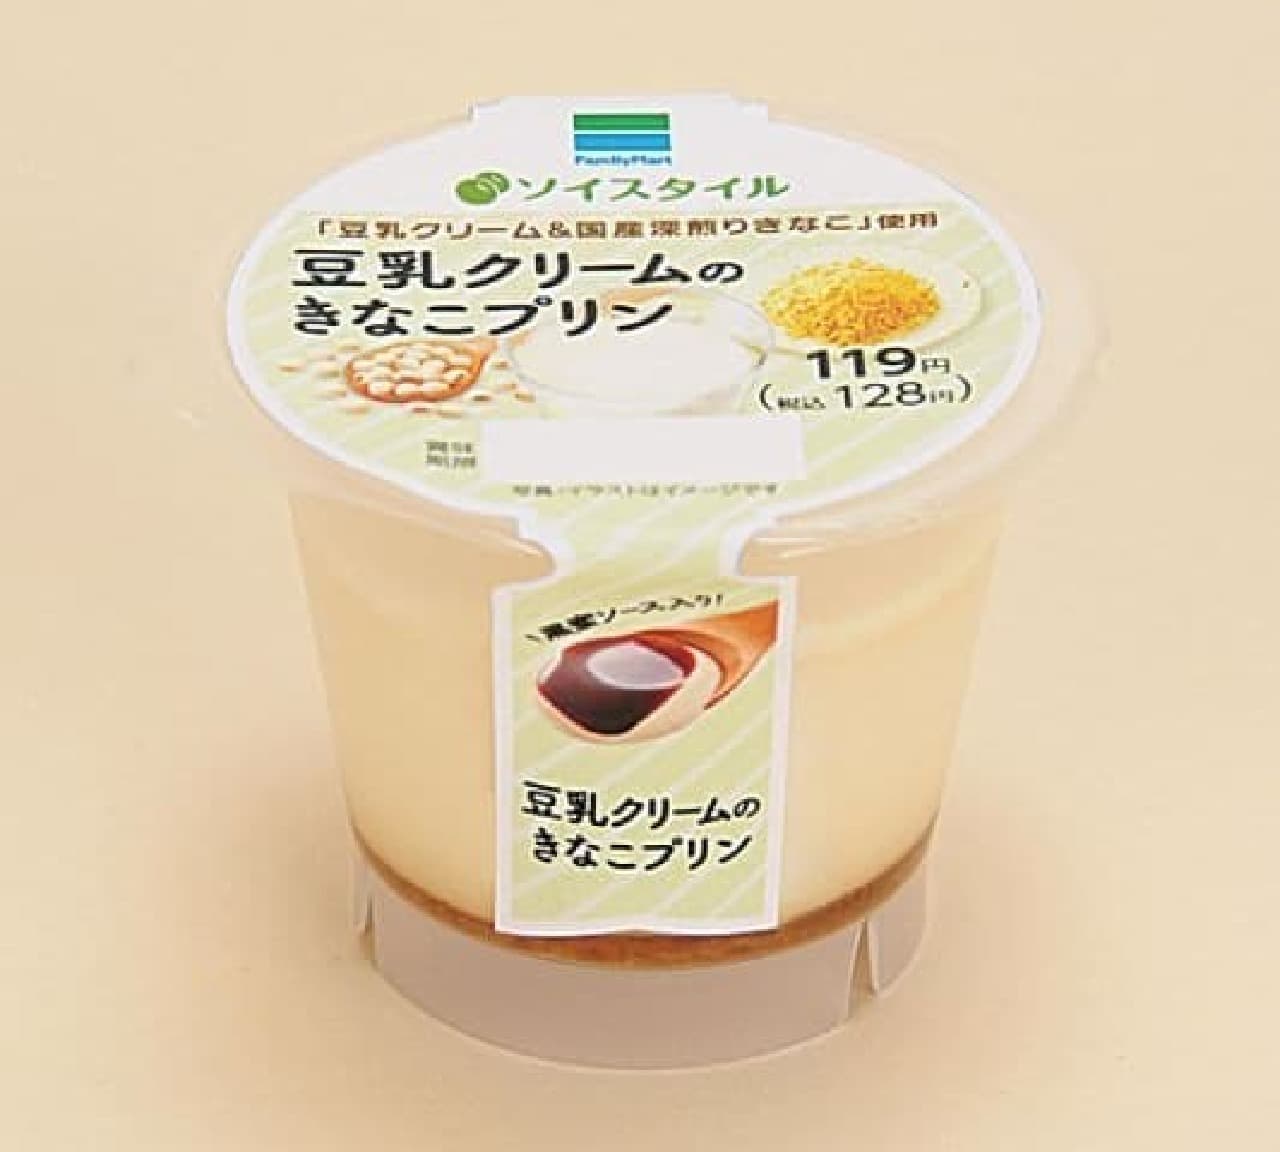 Kinako pudding FamilyMart with soy milk cream